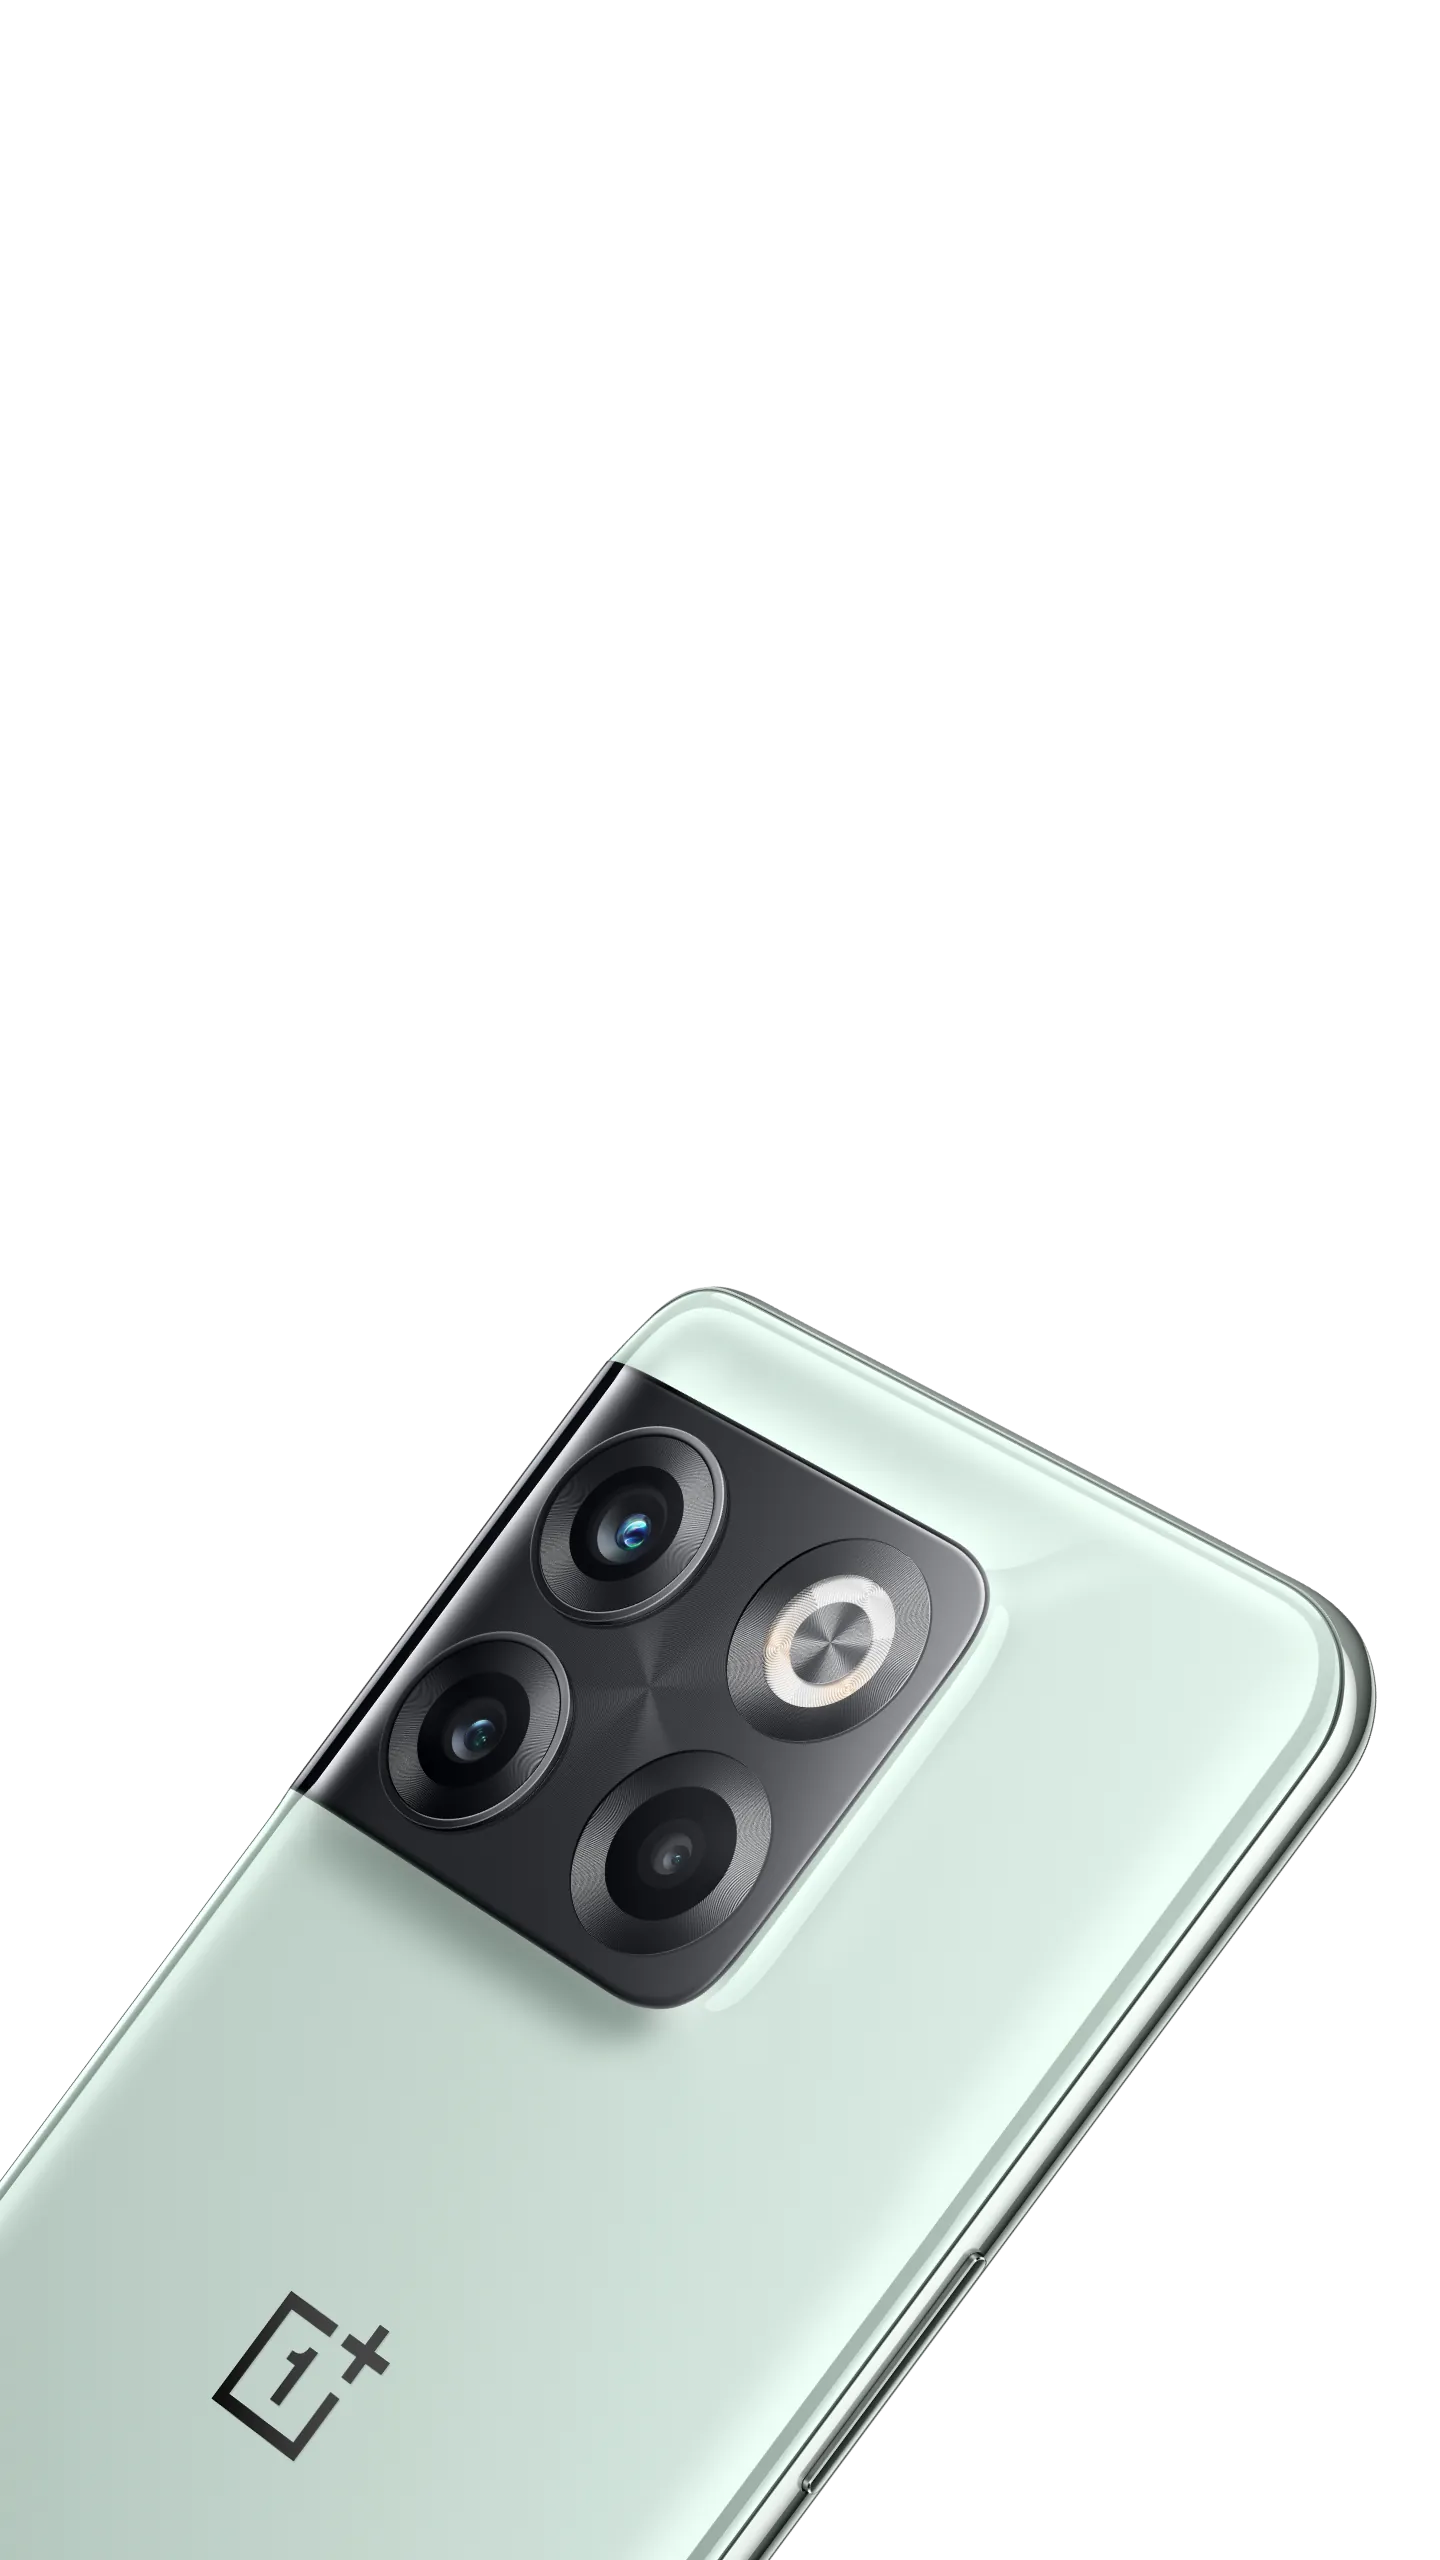 Introducing the innovative OnePlus 10T 5G to TikTok Shop